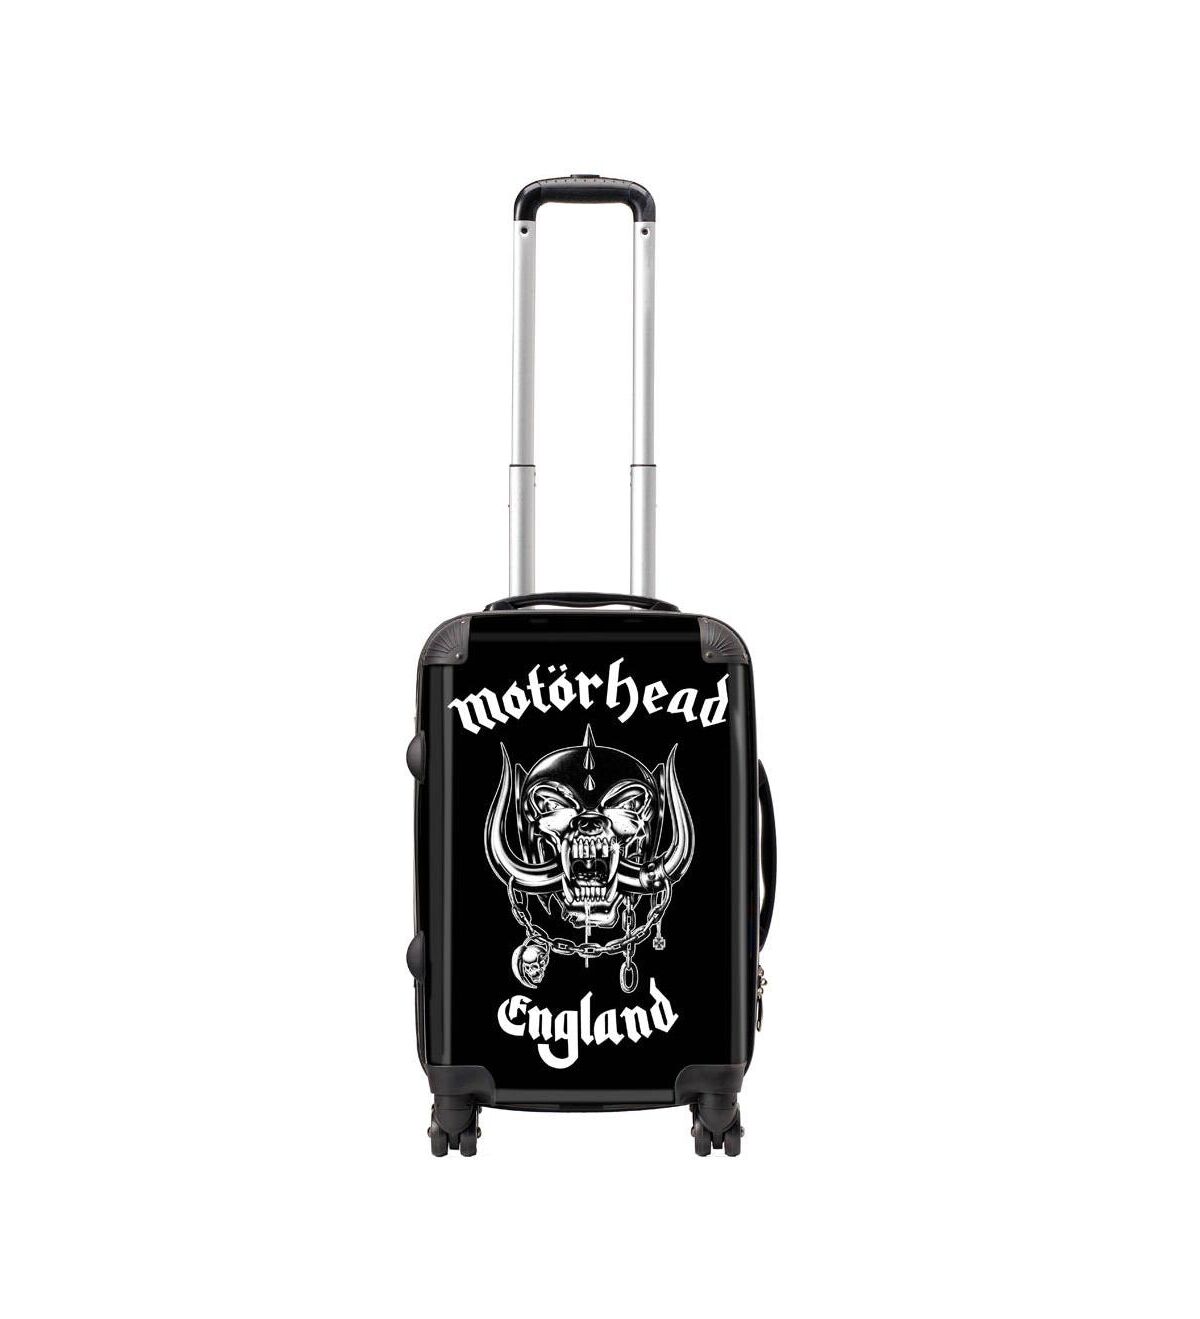 Rocksax Motorhead Travel Bag Luggage - England - Small - Carry On - Multi-colored